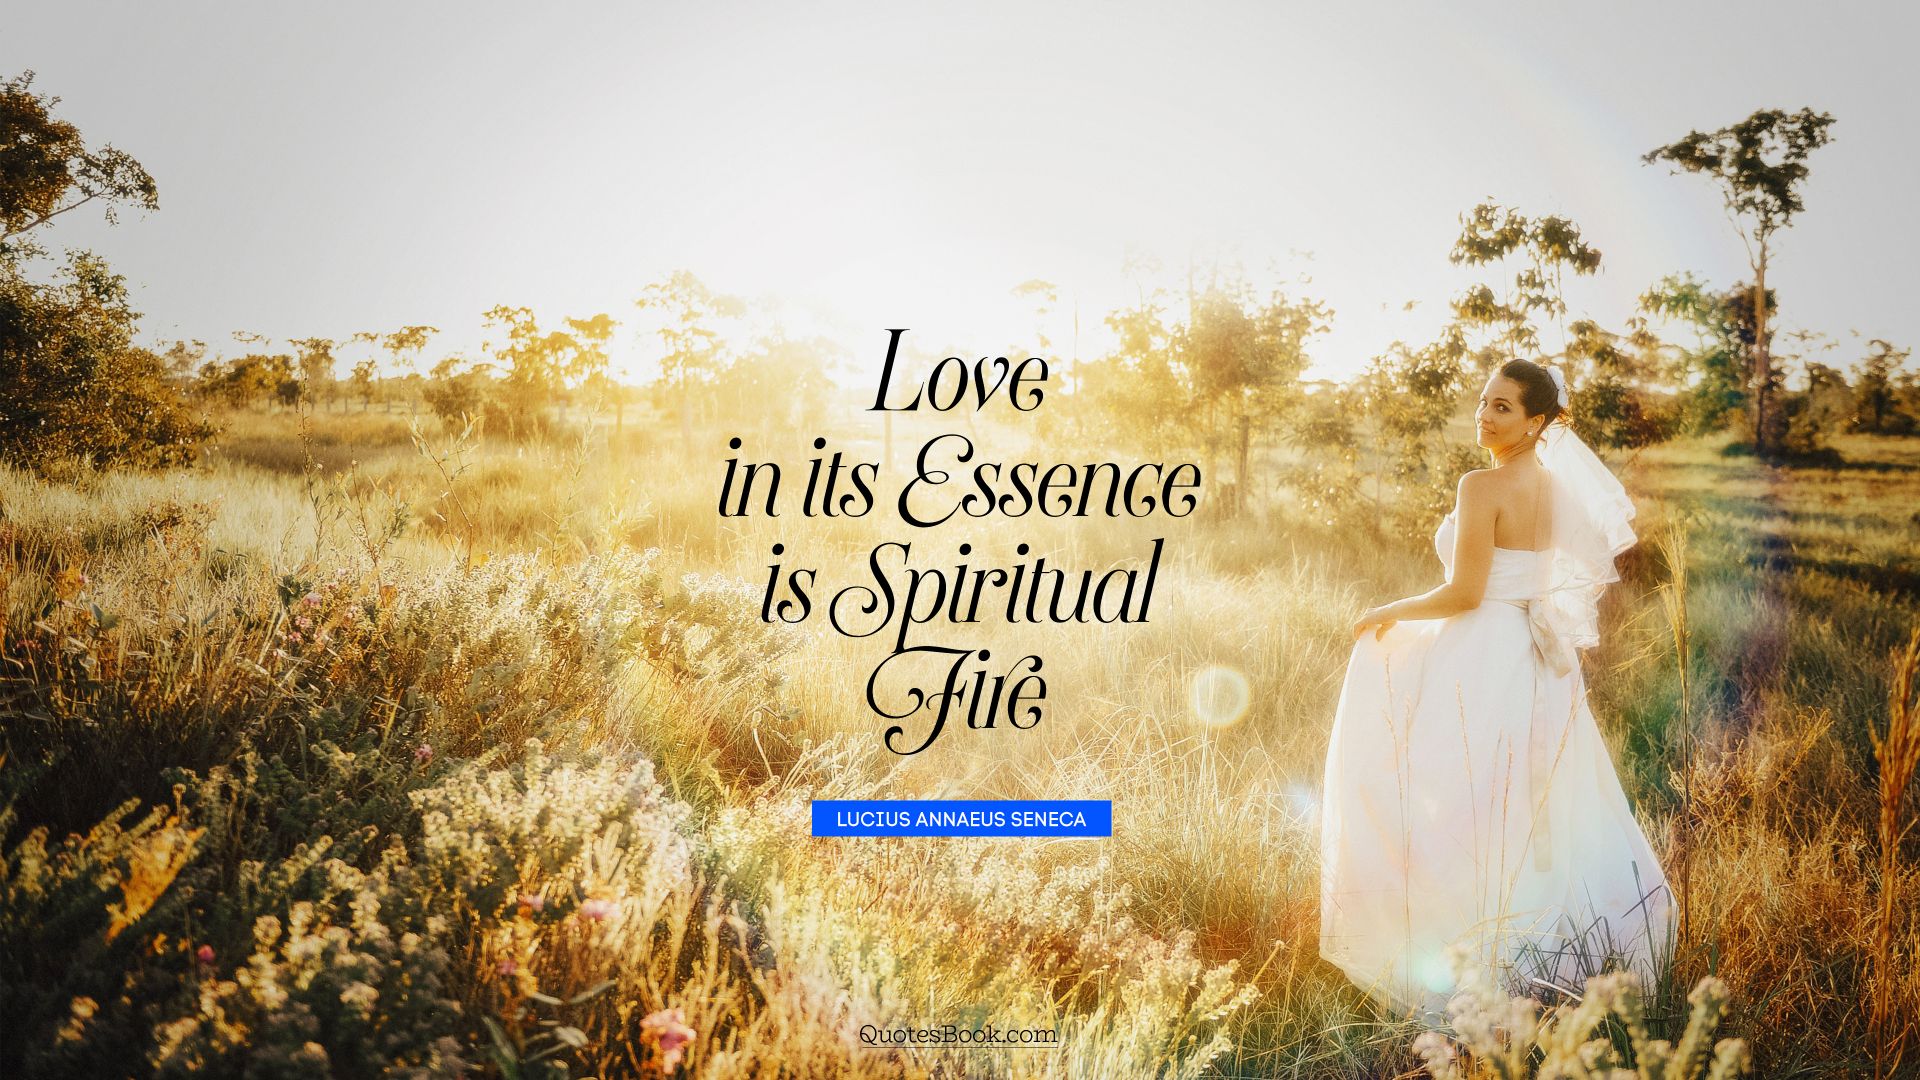 Love in its essence is spiritual fire. - Quote by Lucius Annaeus Seneca